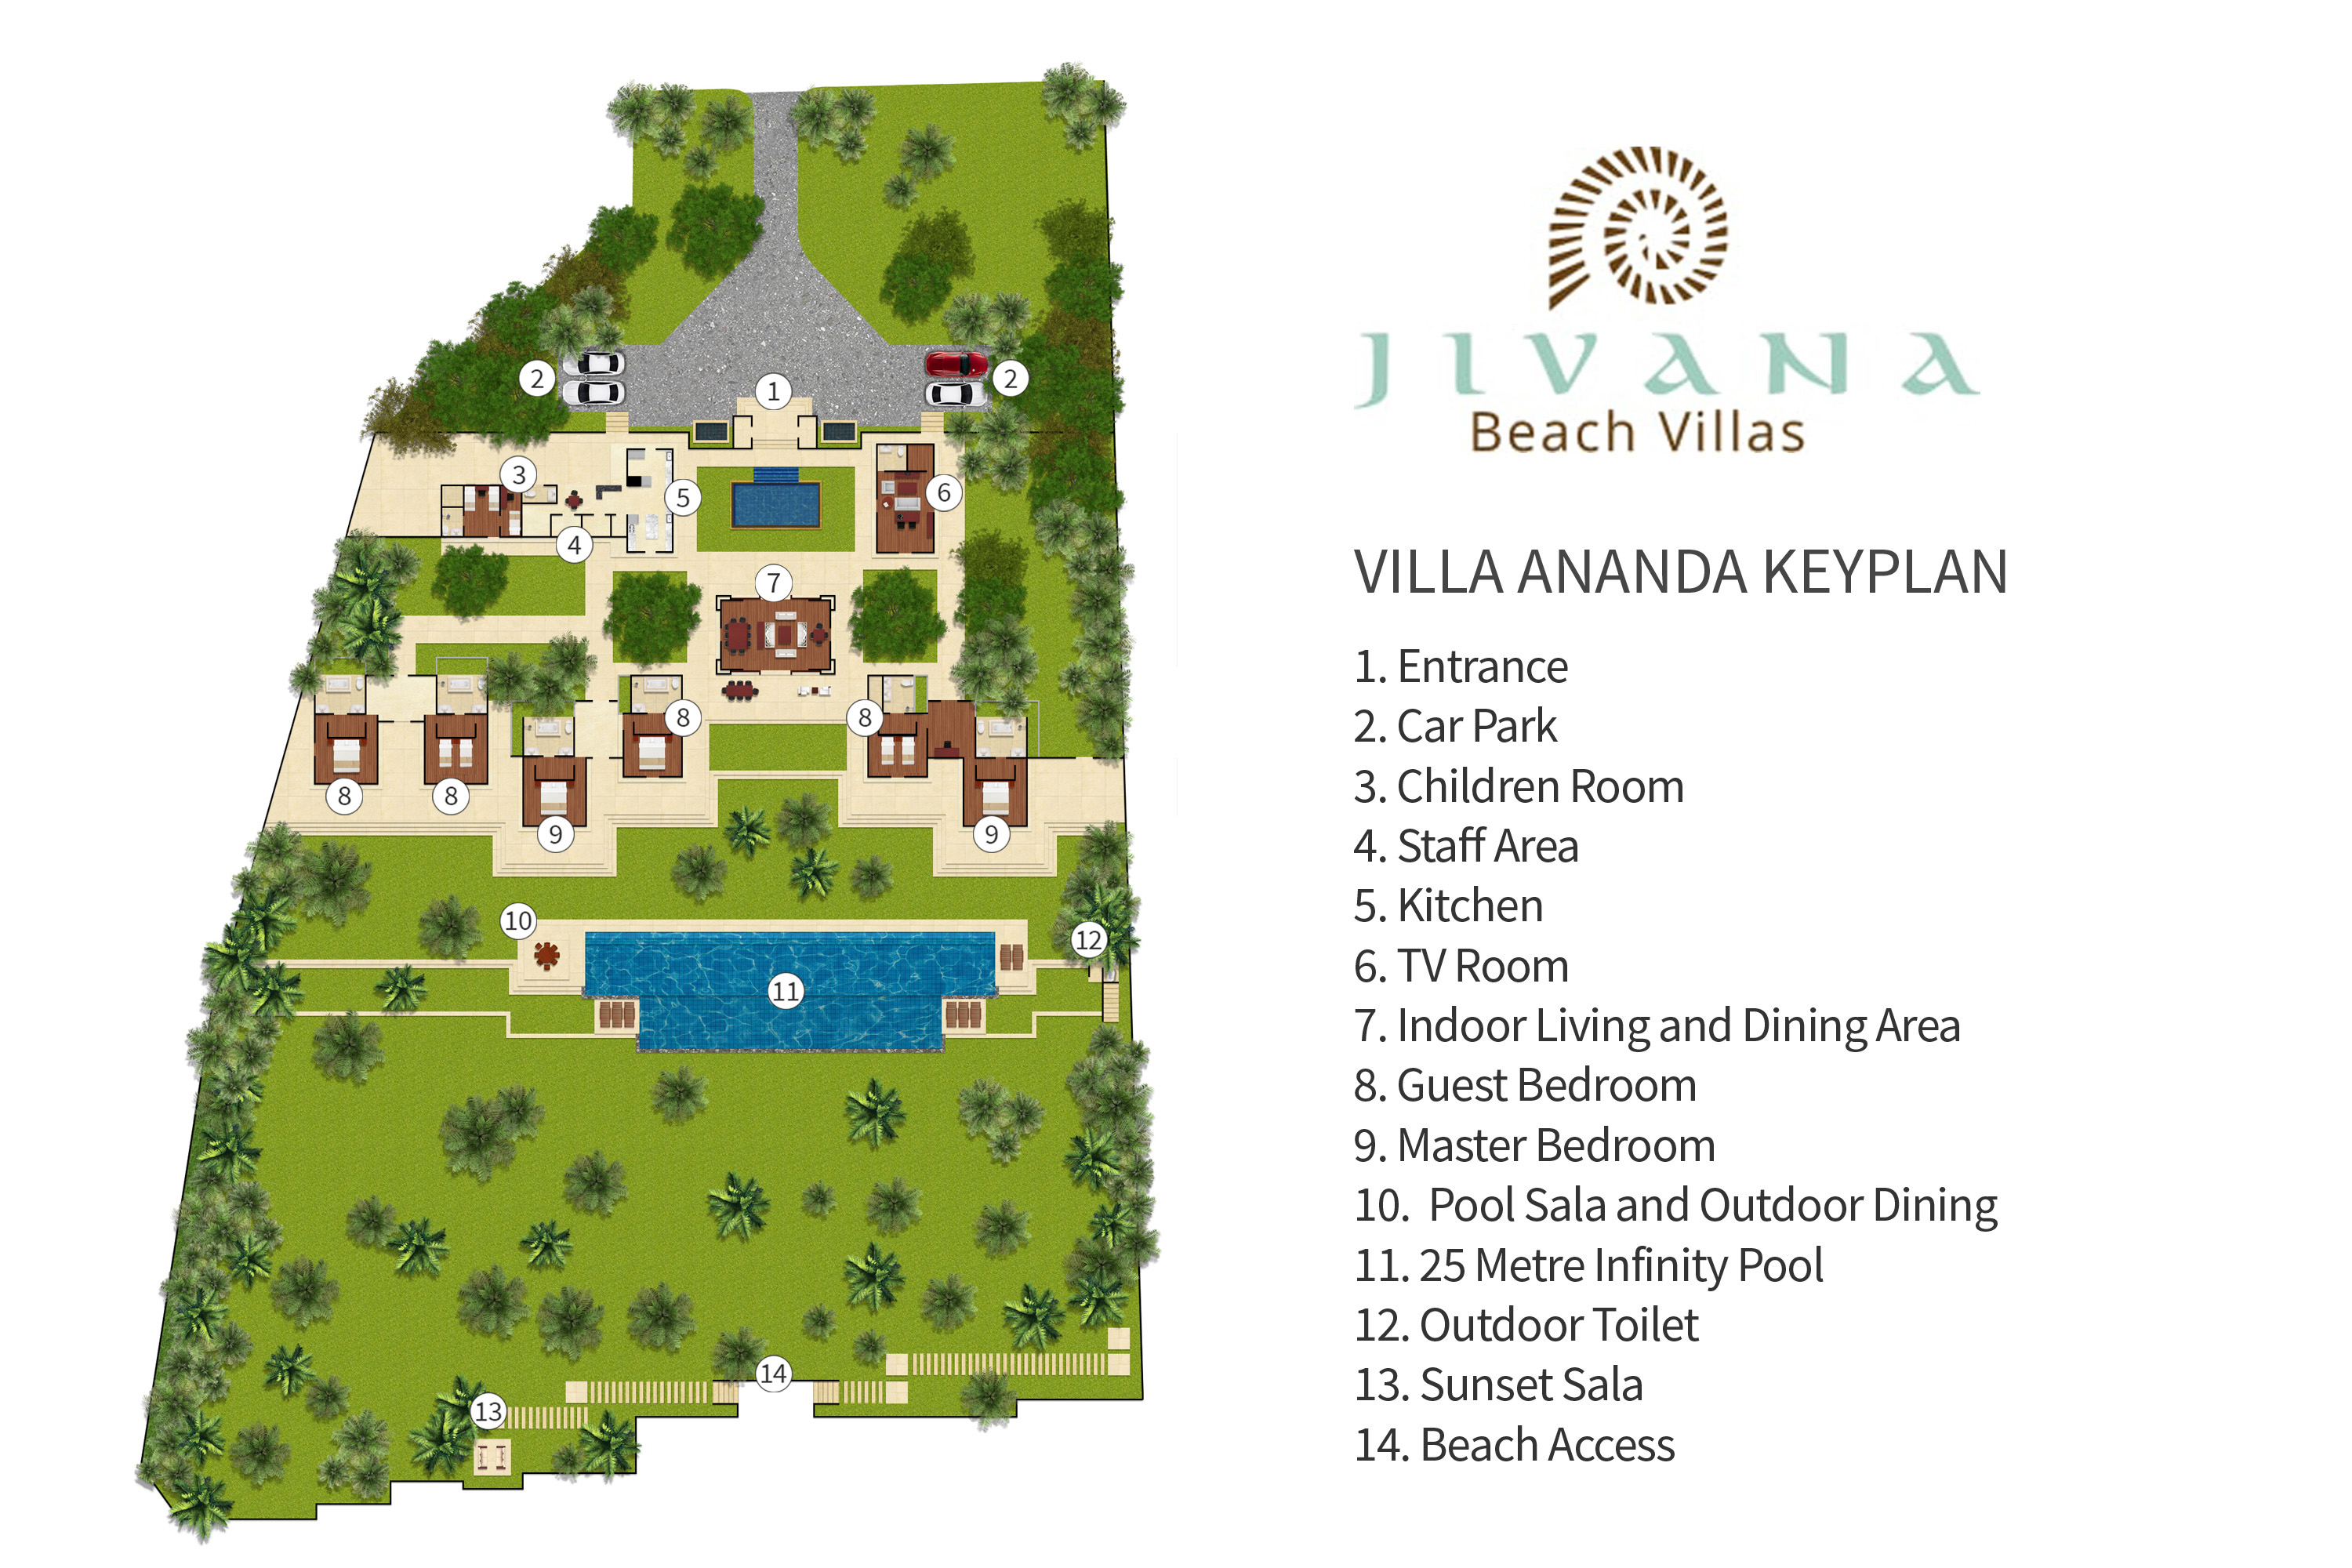 Jivana Beach Villas - Villa Ananda